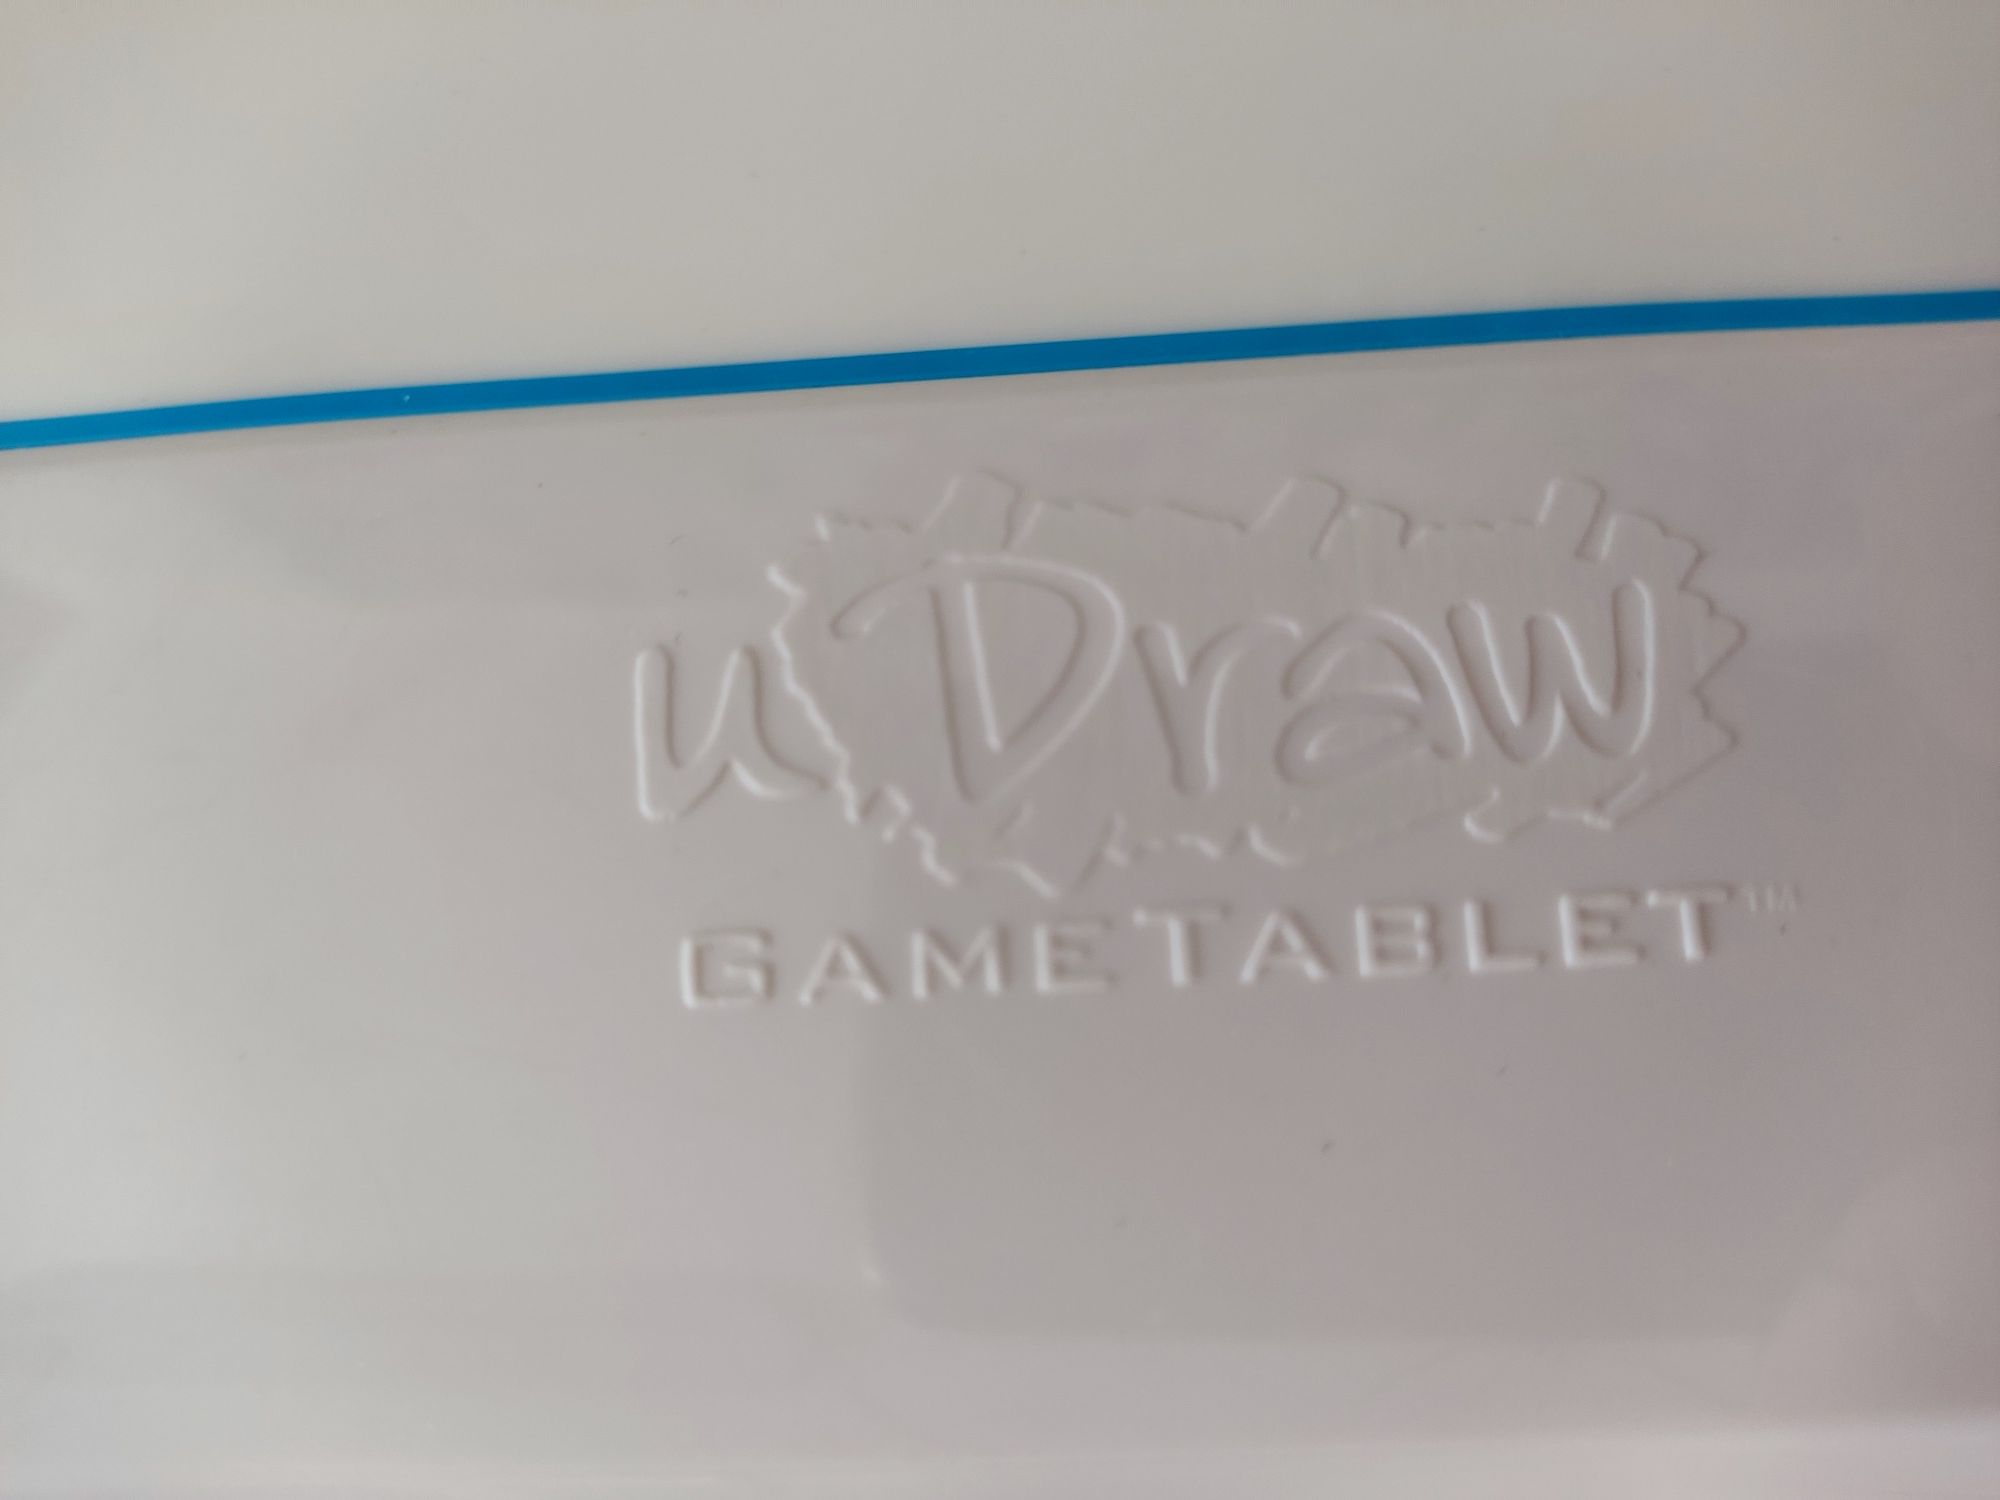 uDraw Game tablet Wii (sem jogos) - 100% funcional